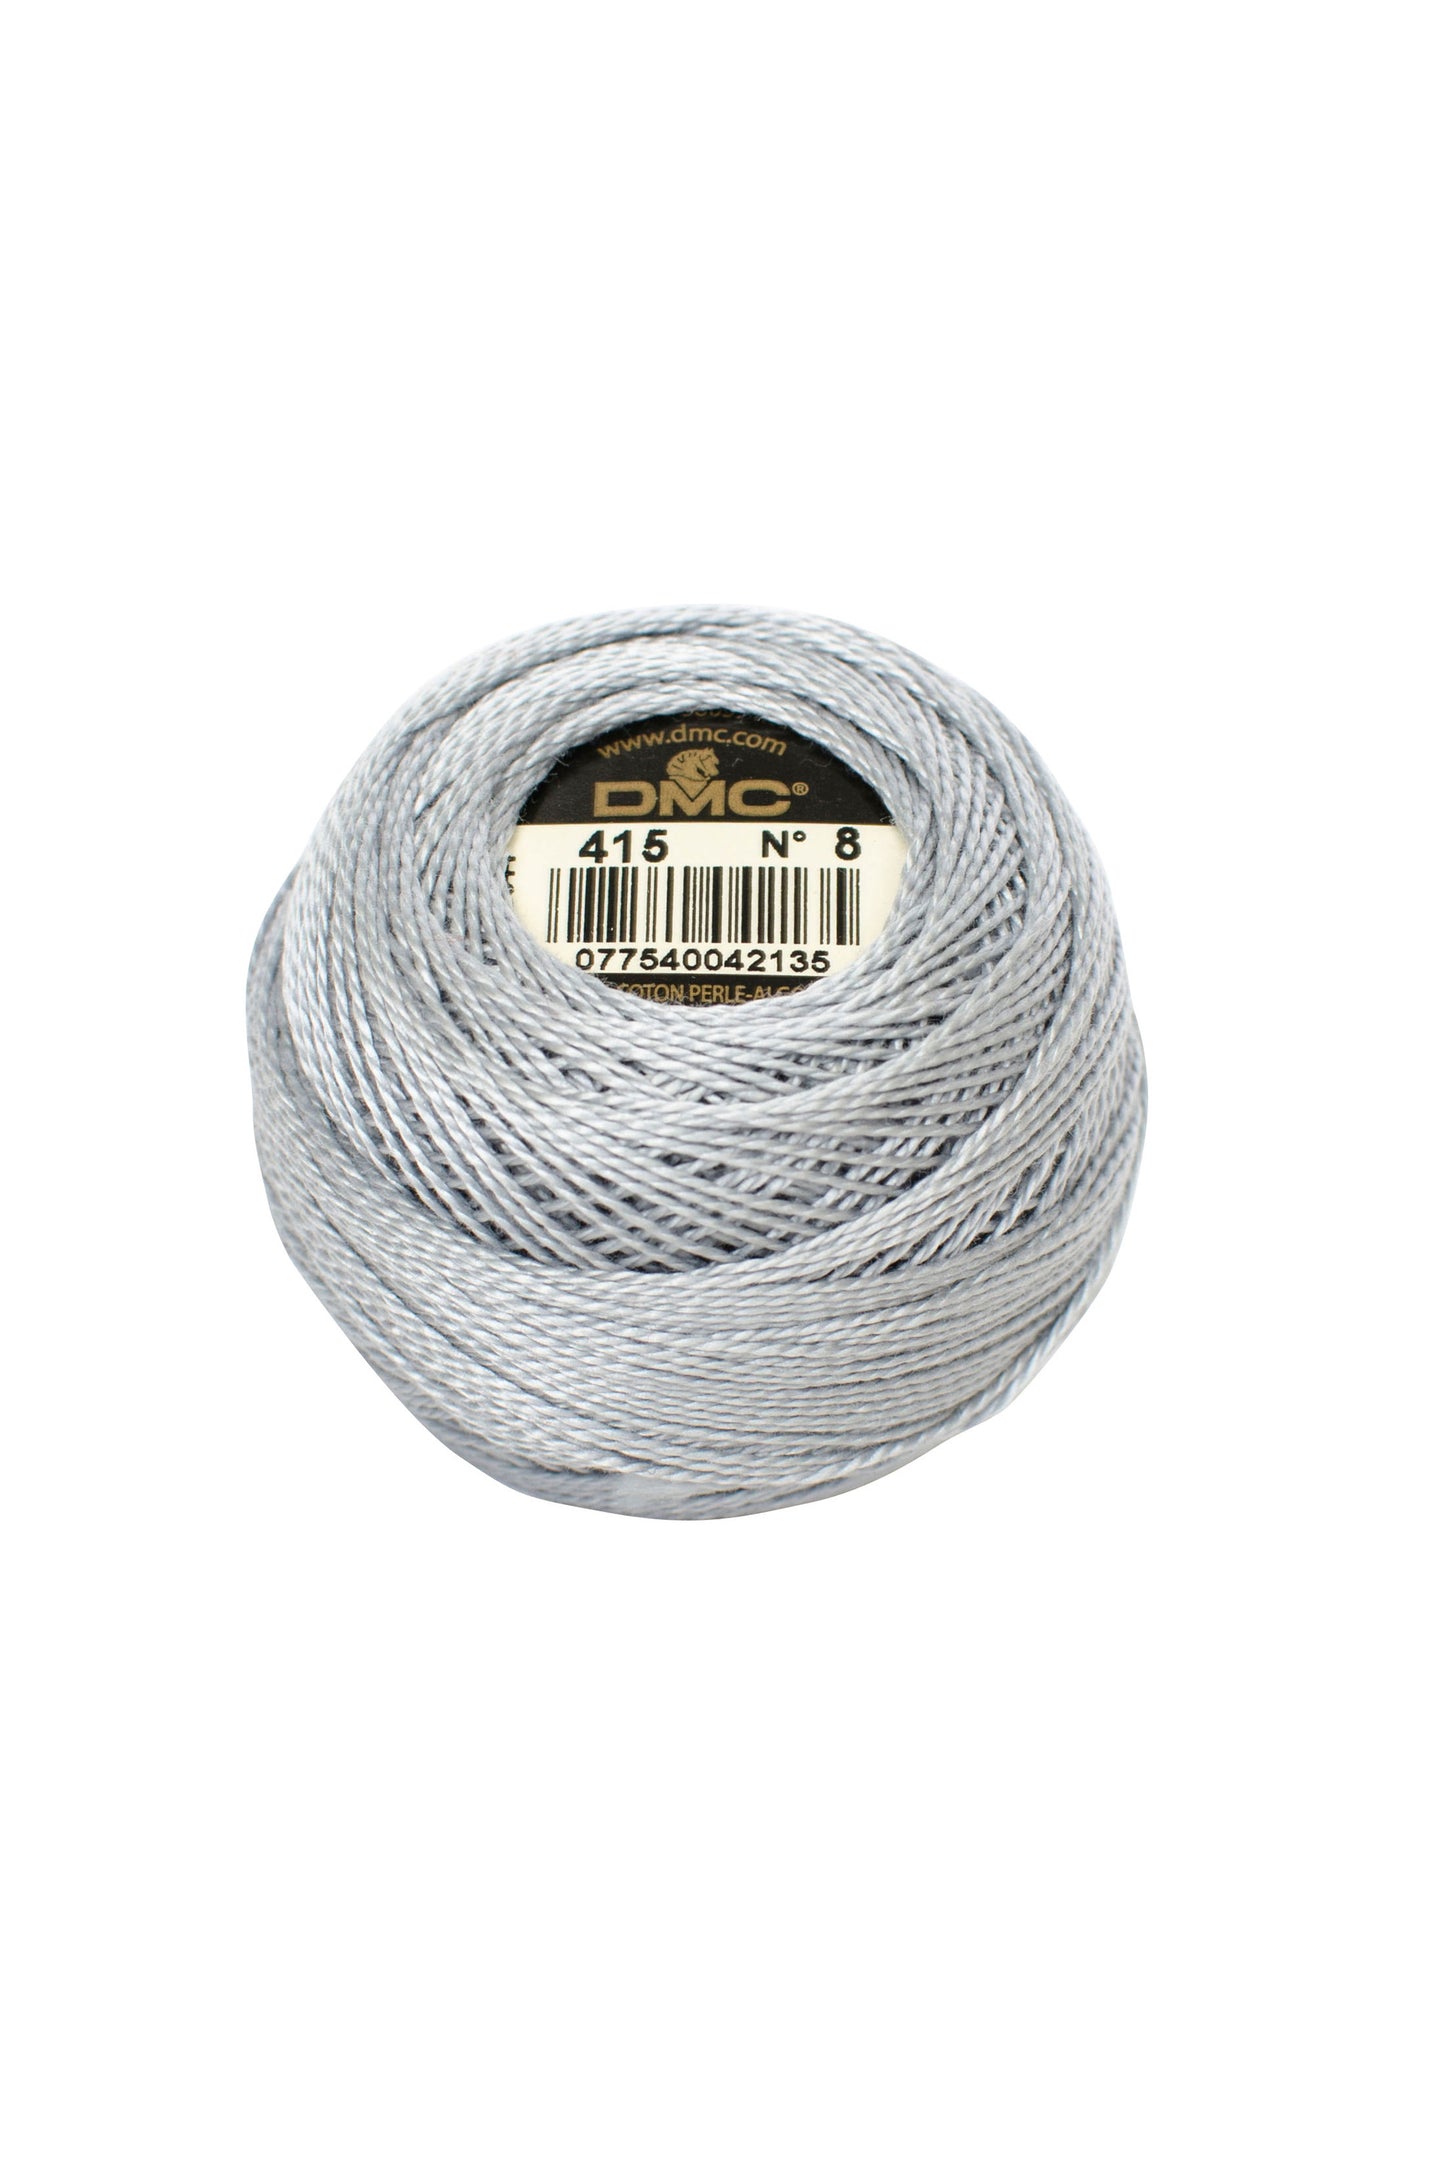 415 Pearl Grey - DMC #5 Perle Cotton Ball